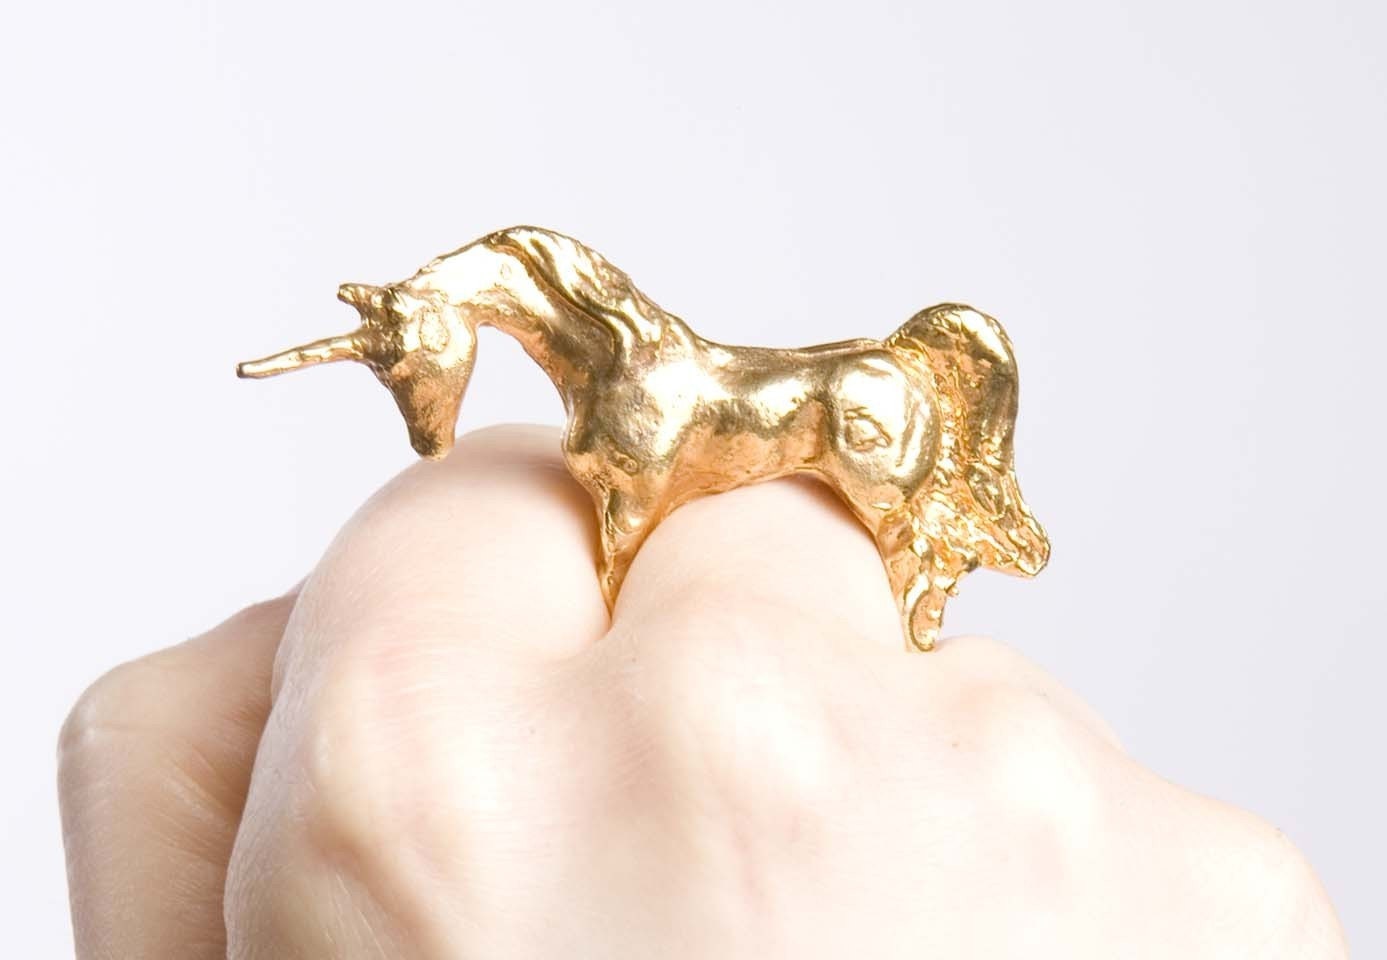 The Golden Unicorn ring by Rabid Fox